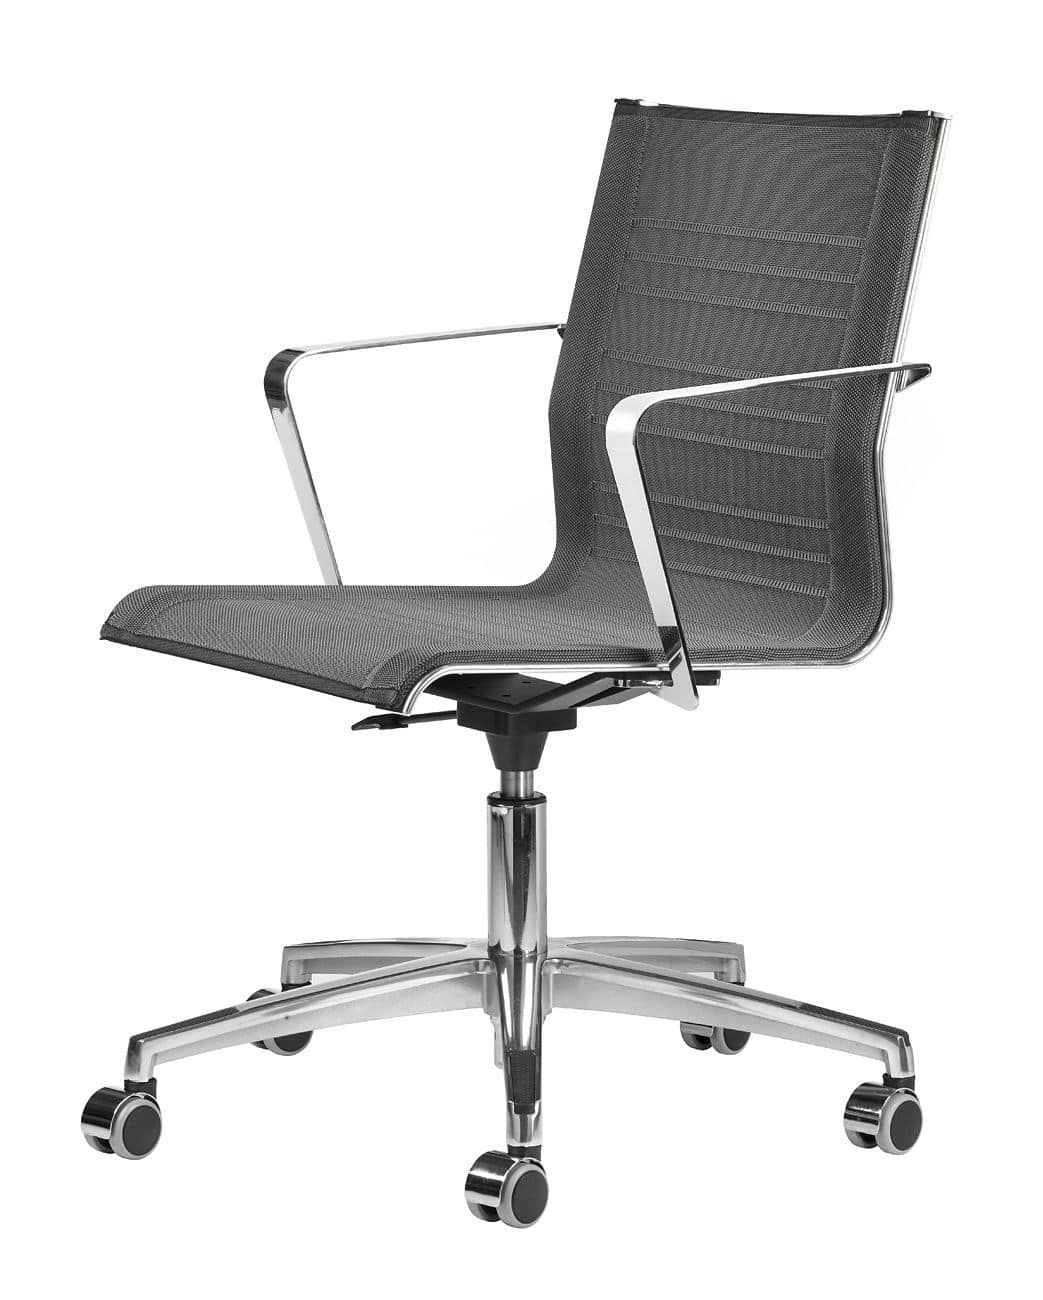 KEYPLUS 3152, Task chair with wheels, chromed metal frame